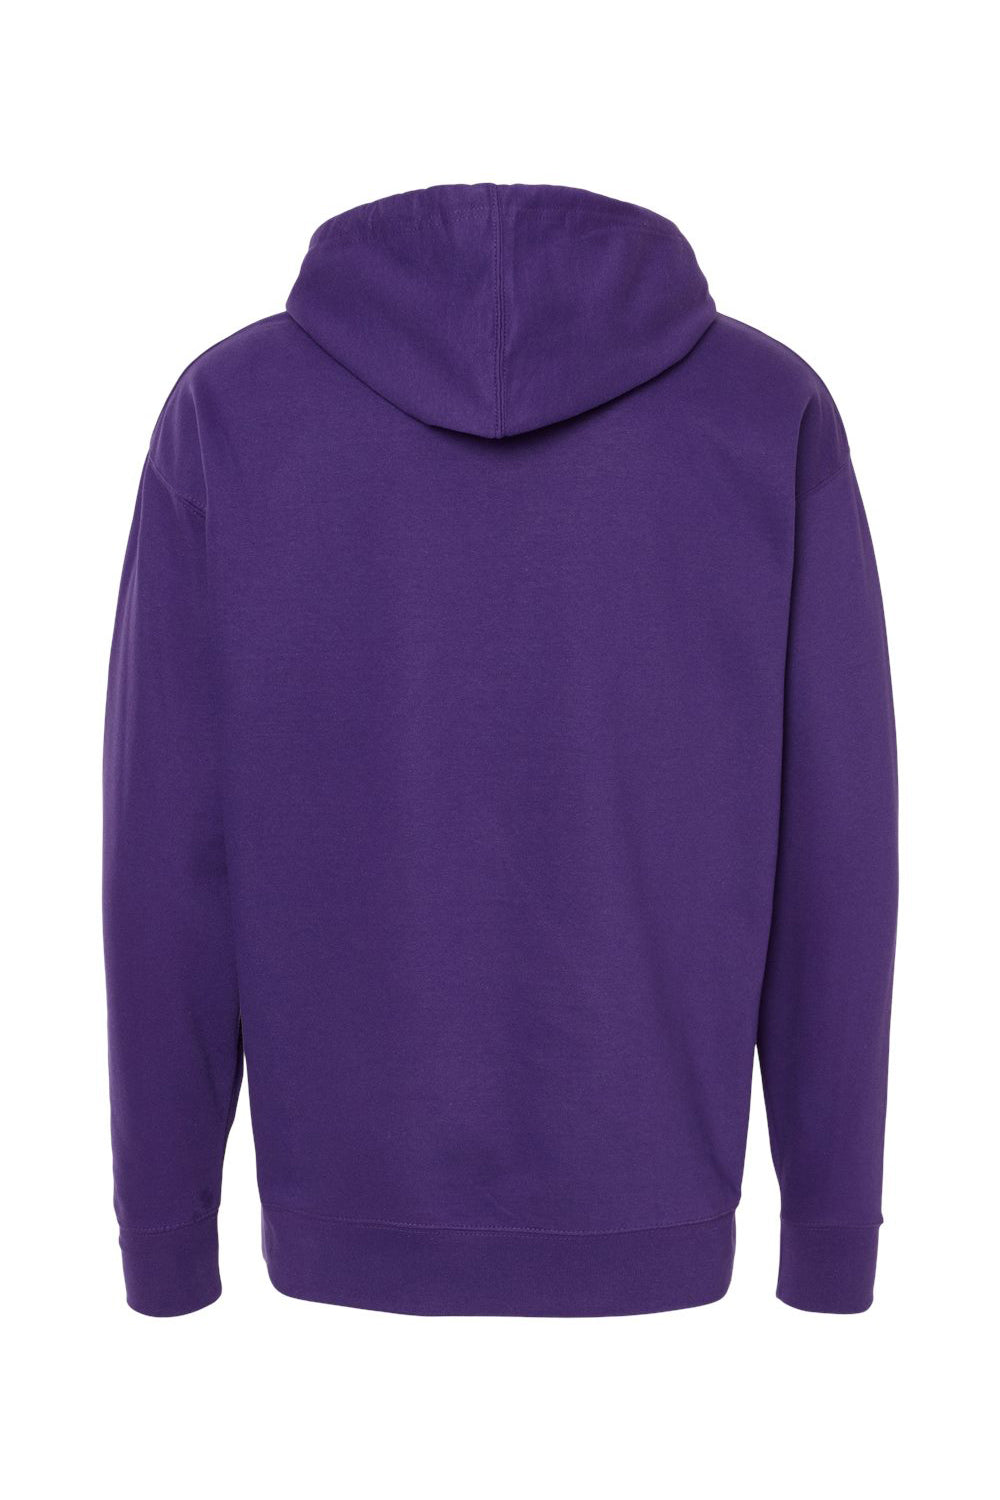 Independent Trading Co. SS4500 Mens Hooded Sweatshirt Hoodie Purple Flat Back